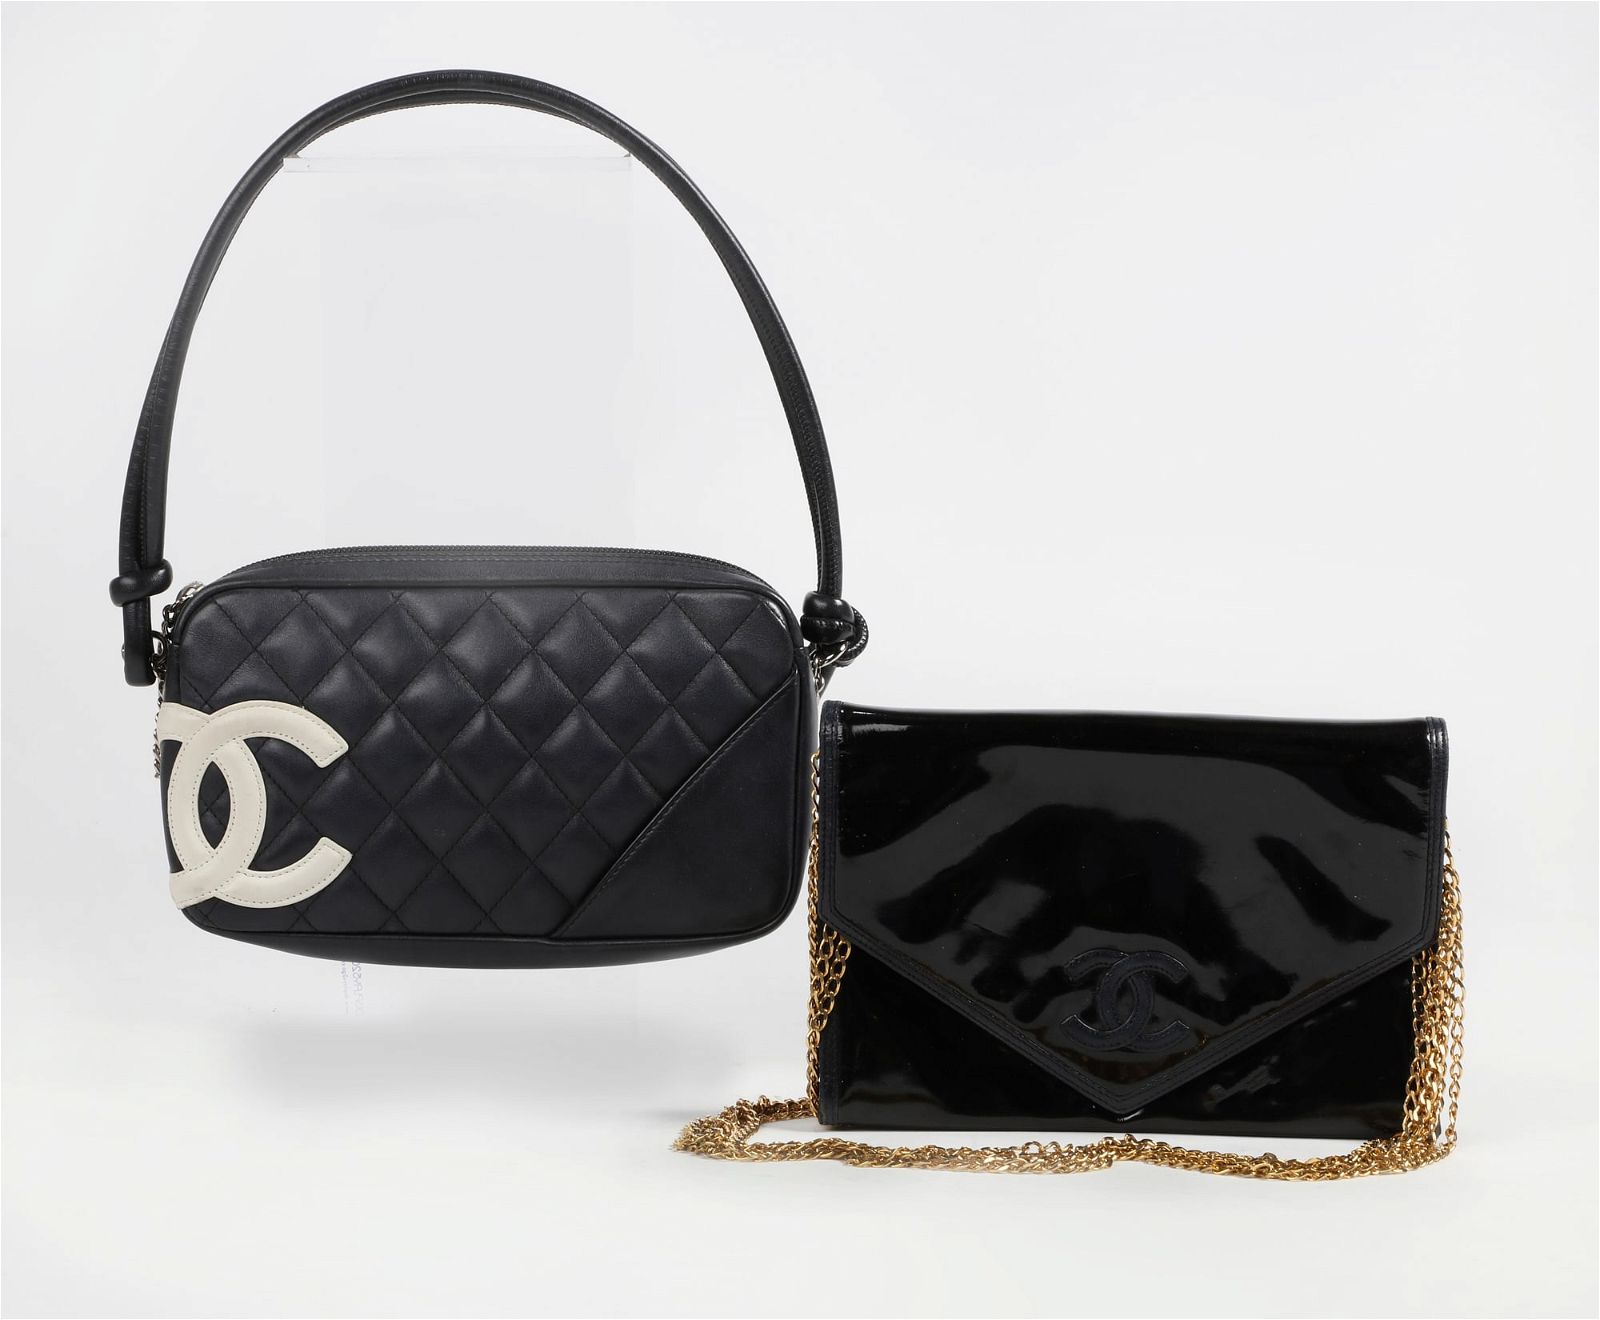 TWO CHANEL HANDBAGSTwo Chanel handbagsComprising 2fb4138